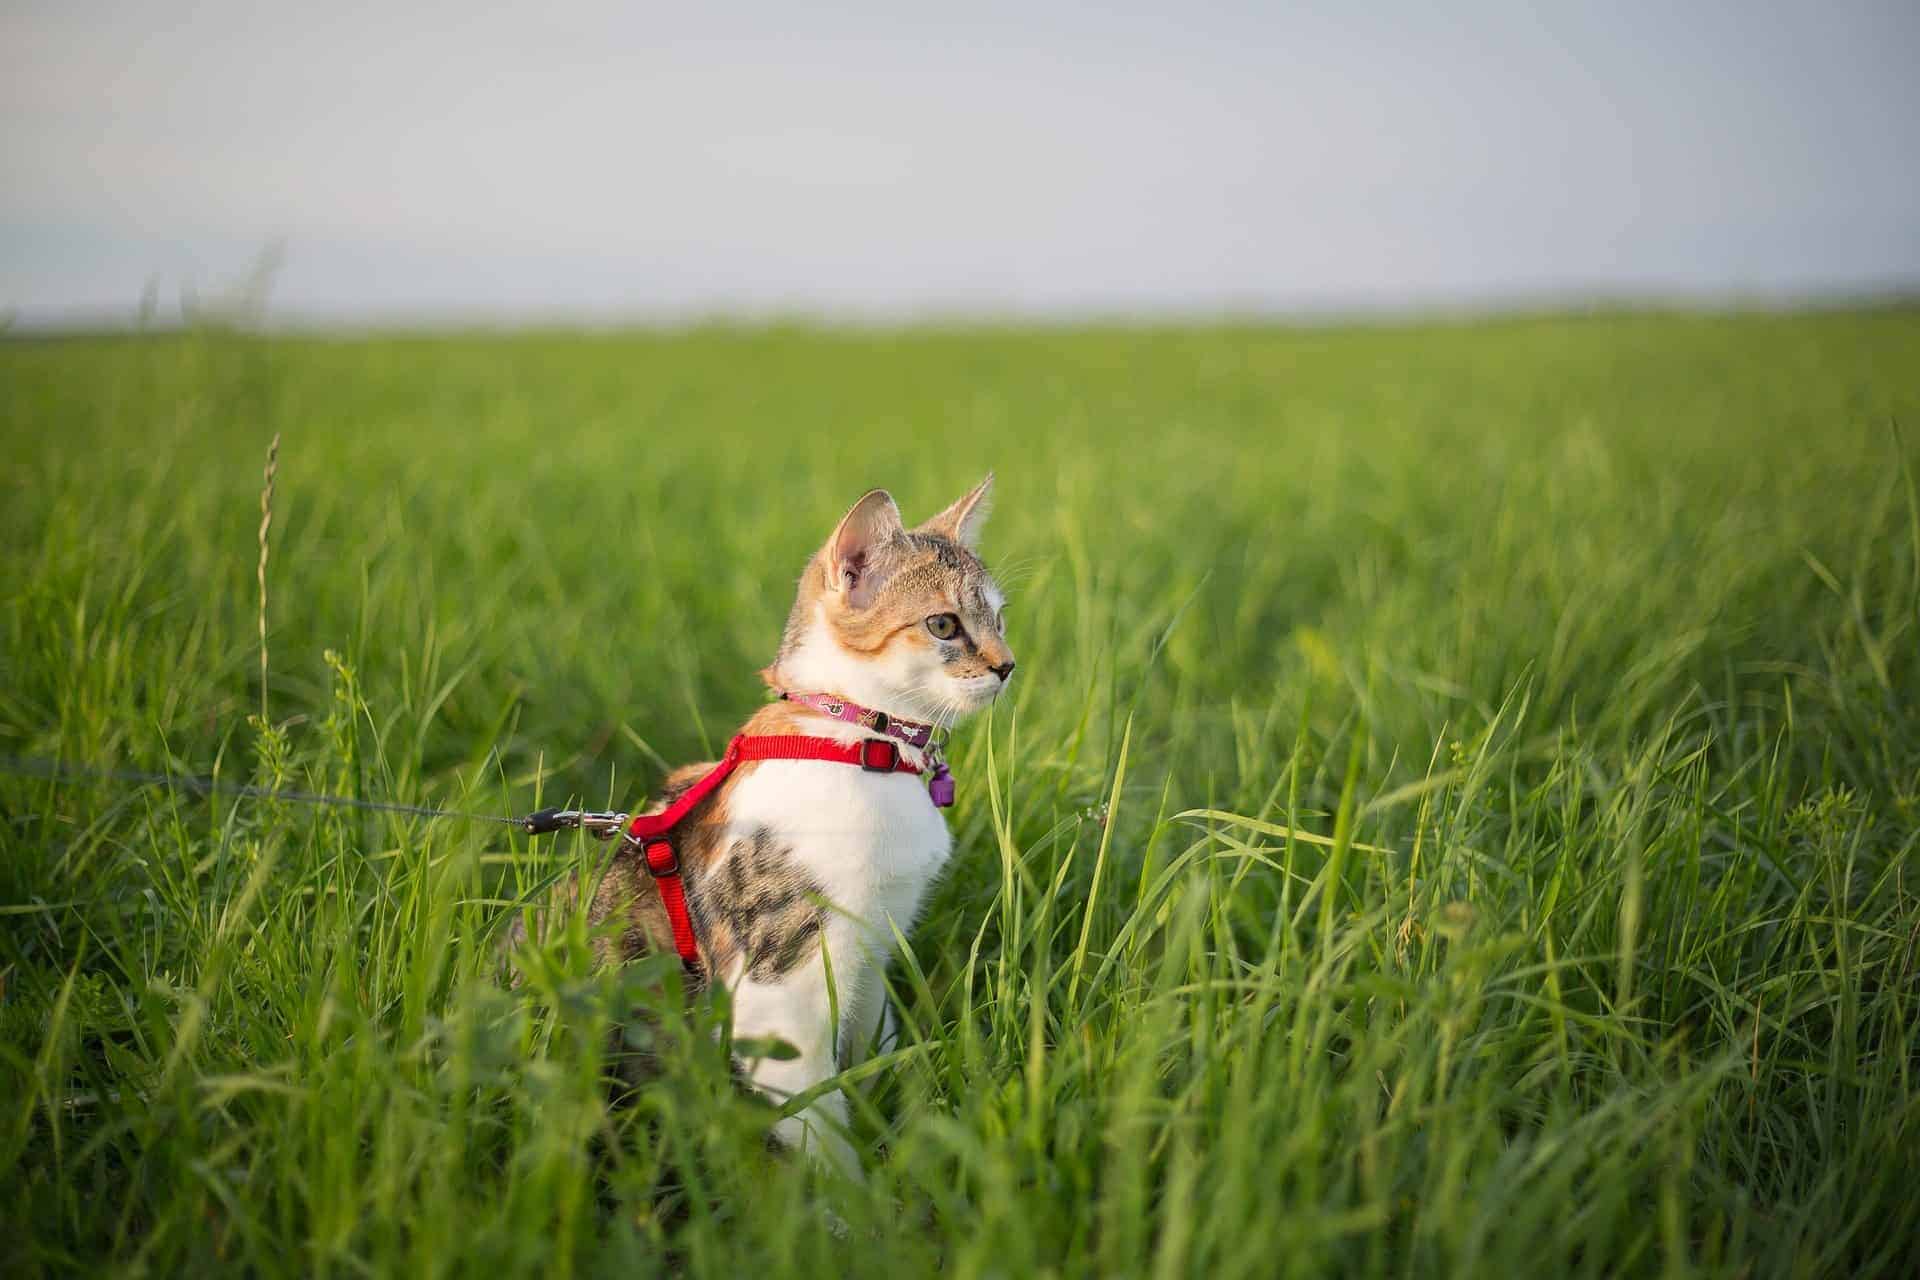 Cat in harness in grass